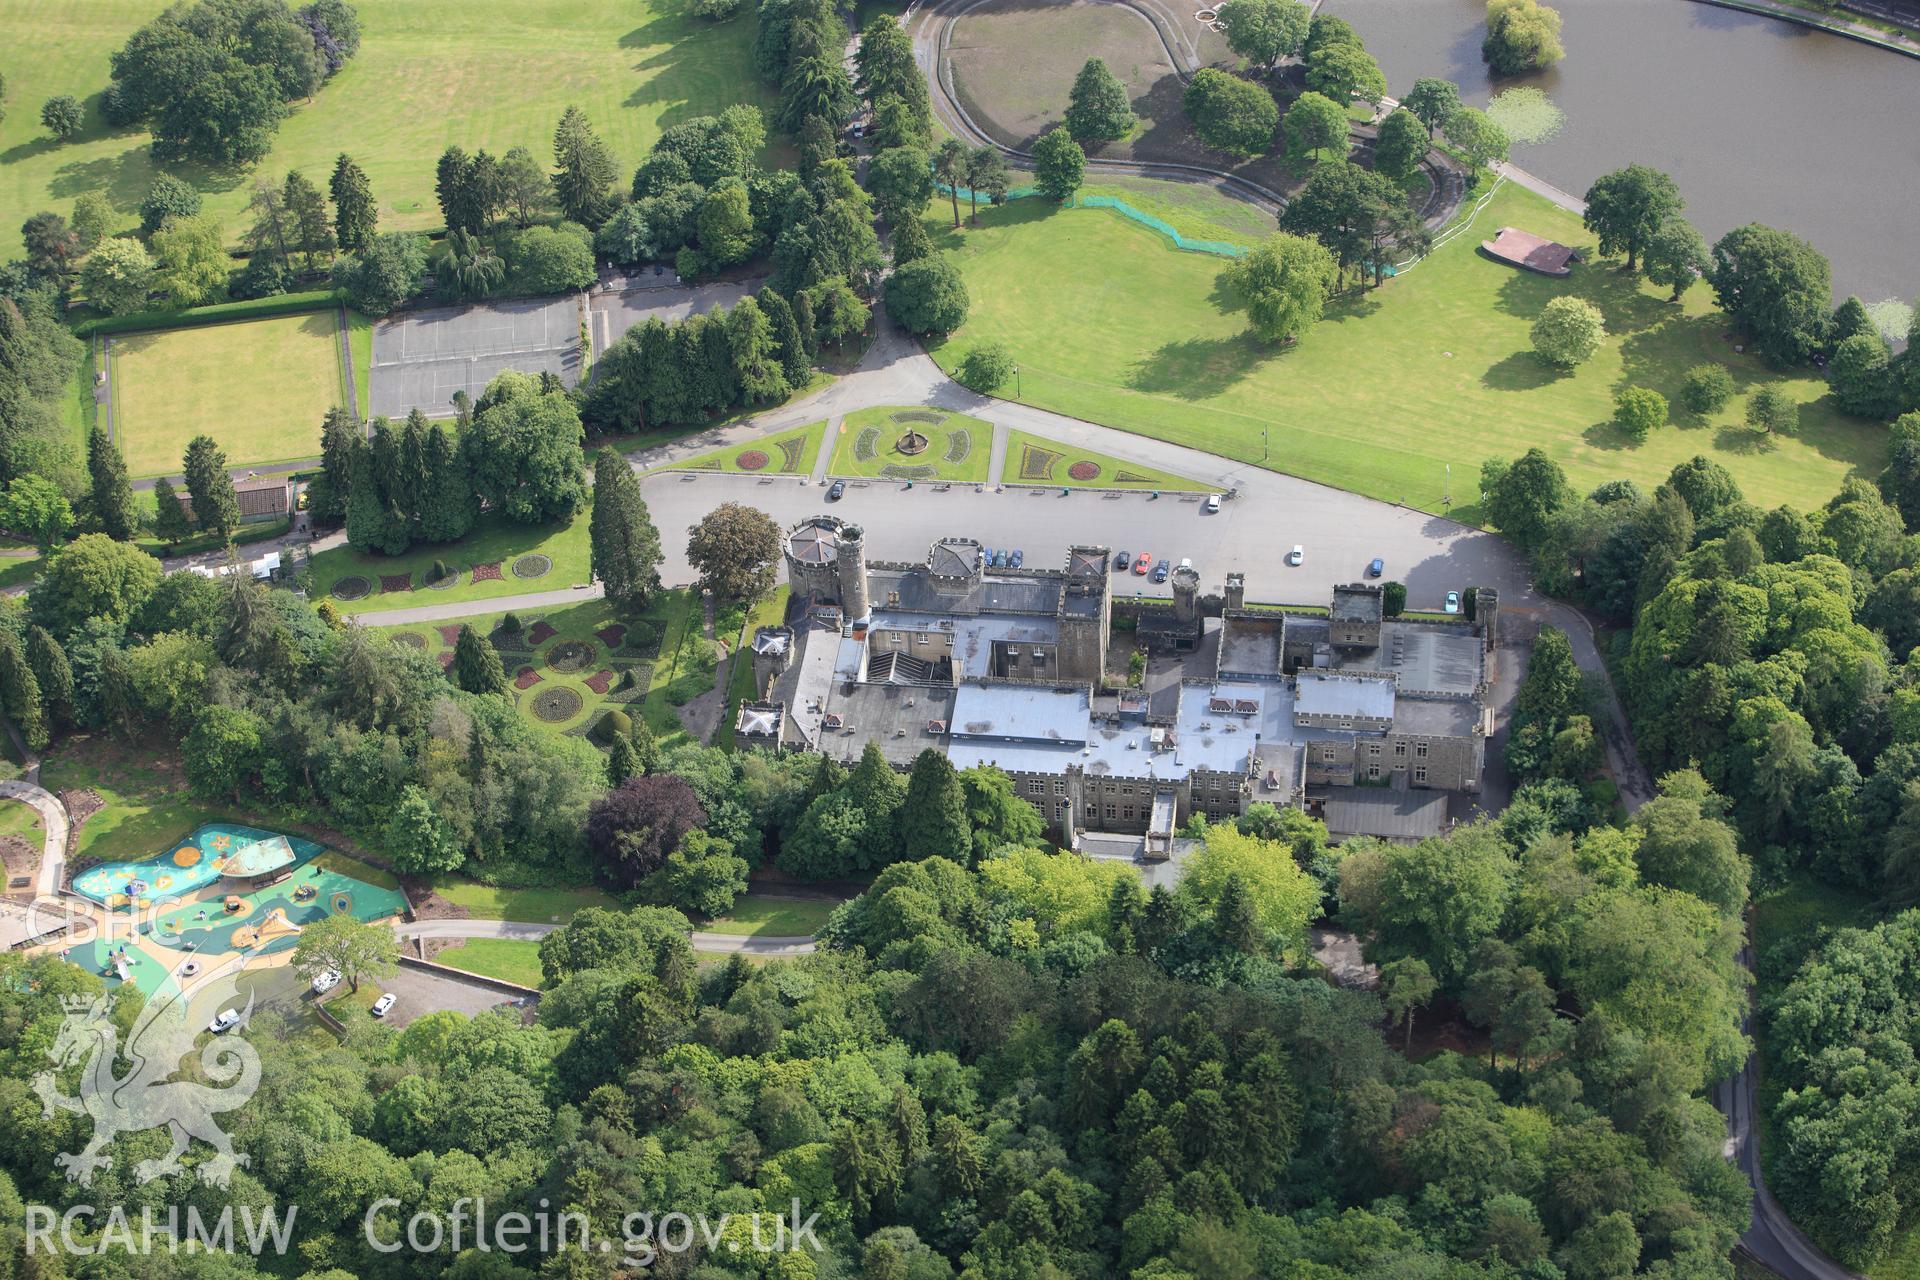 RCAHMW colour oblique photograph of Cyfarthfa Castle, Merthyr Tydfil. Taken by Toby Driver on 13/06/2011.